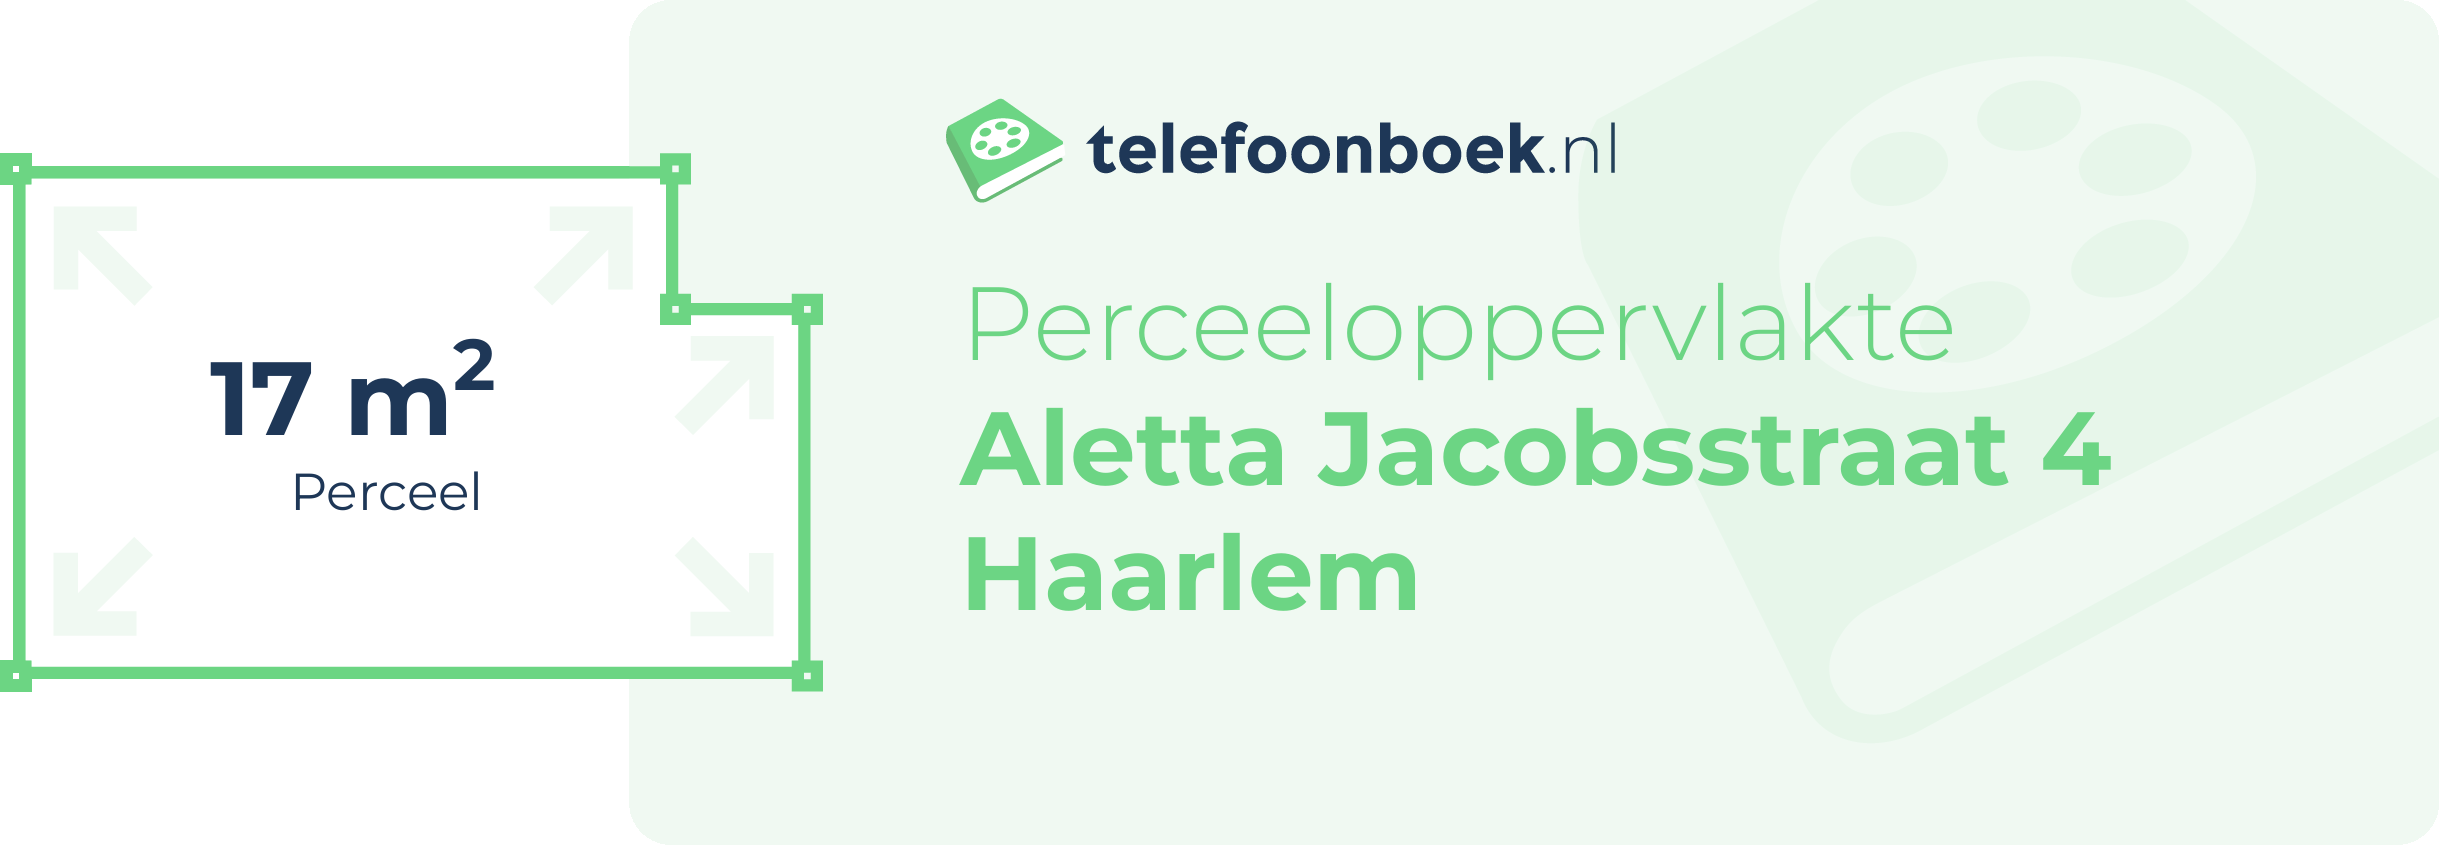 Perceeloppervlakte Aletta Jacobsstraat 4 Haarlem